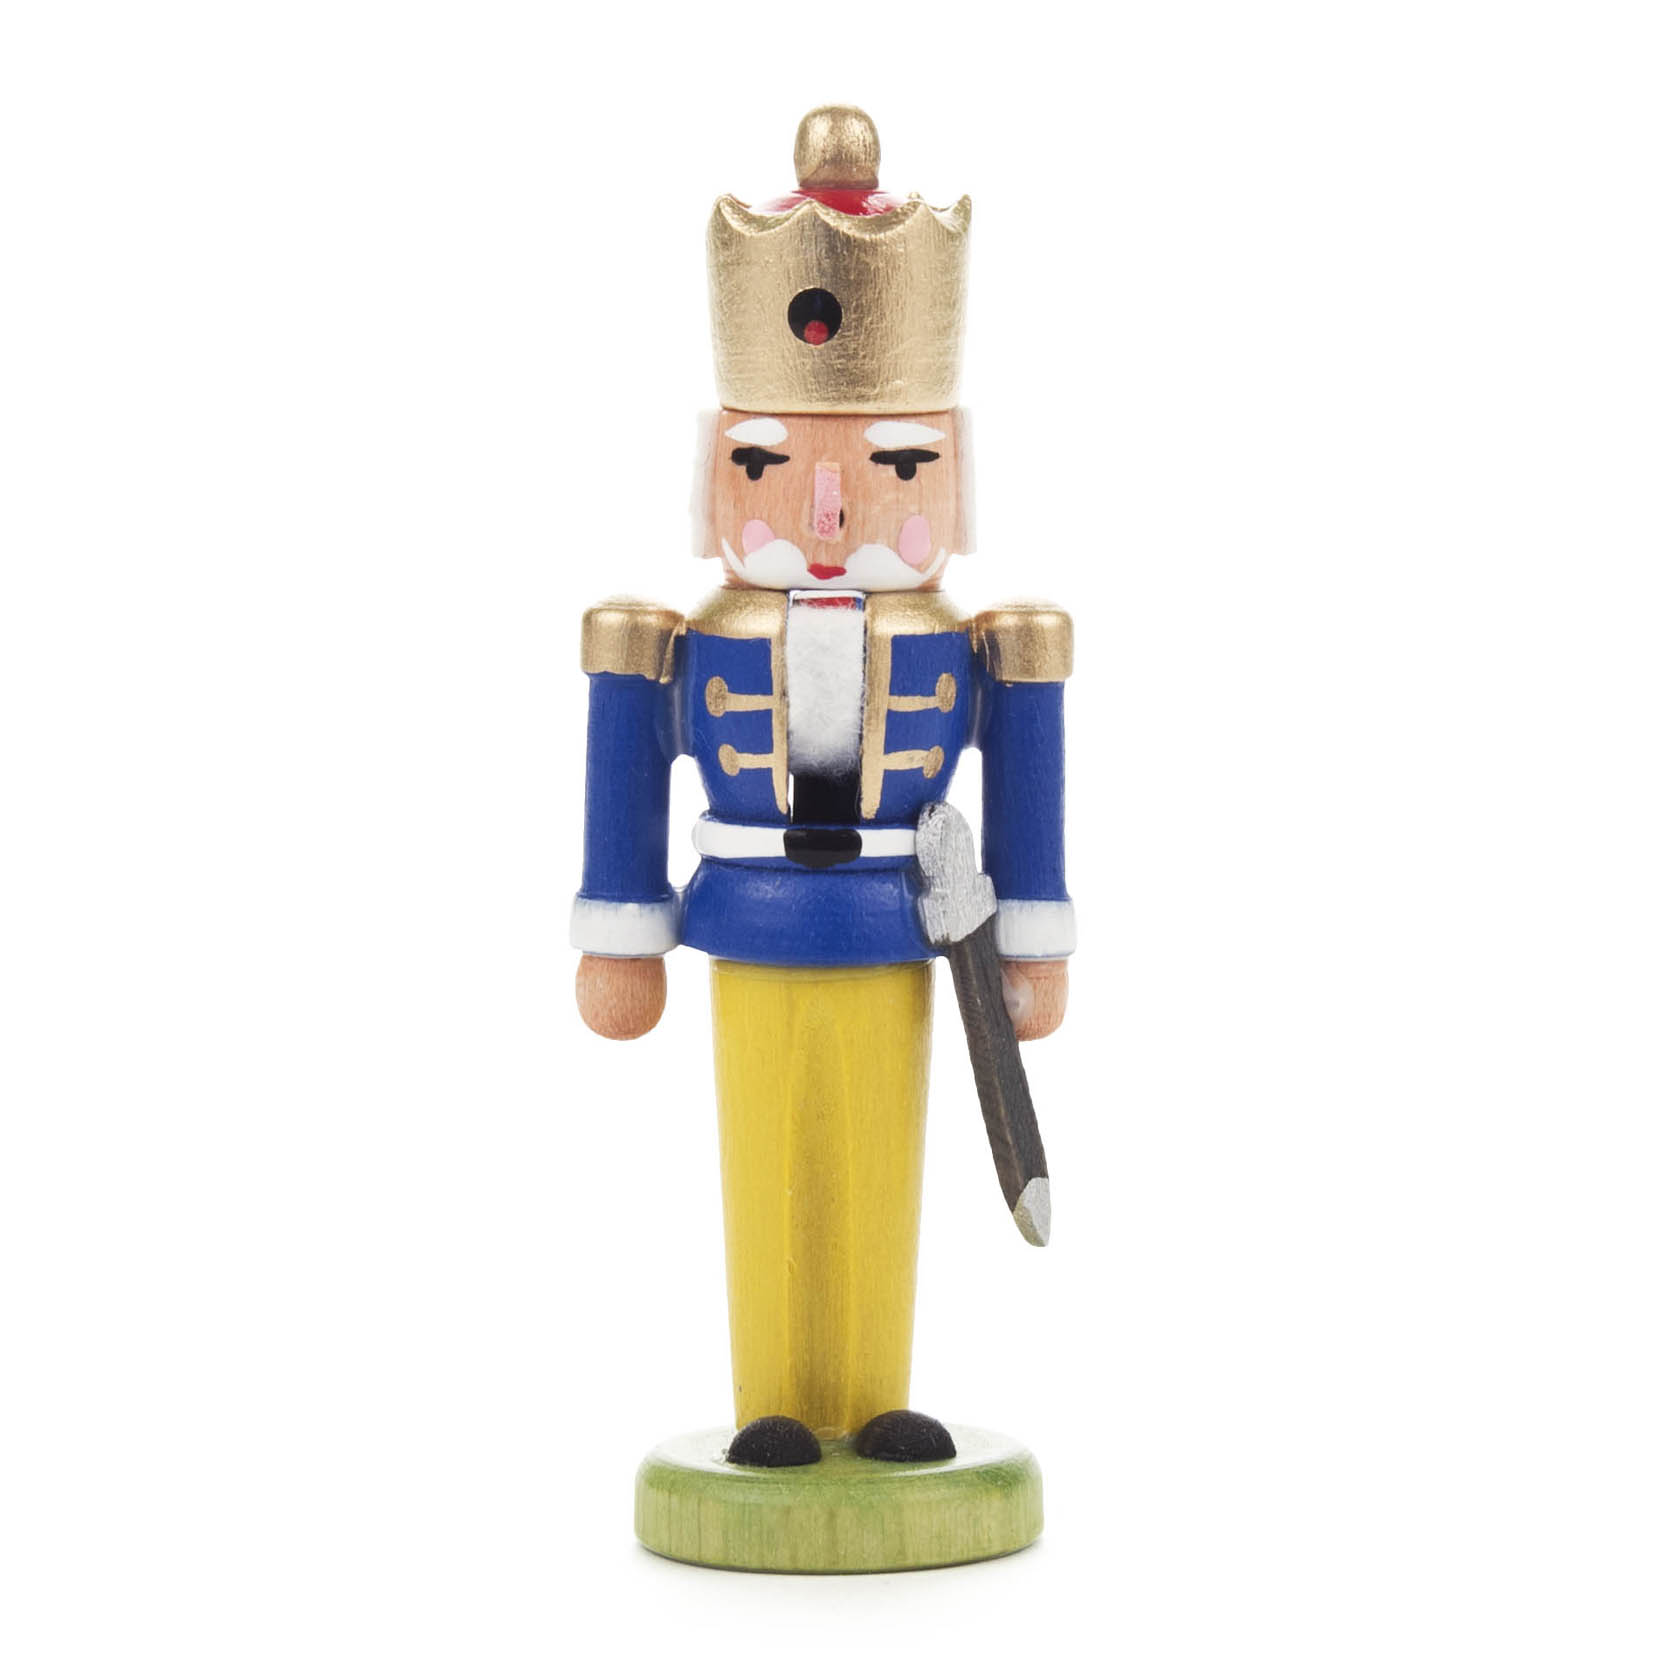 Mini-Nussknacker König blau-gelb, 7,5cm im Dregeno Online Shop günstig kaufen